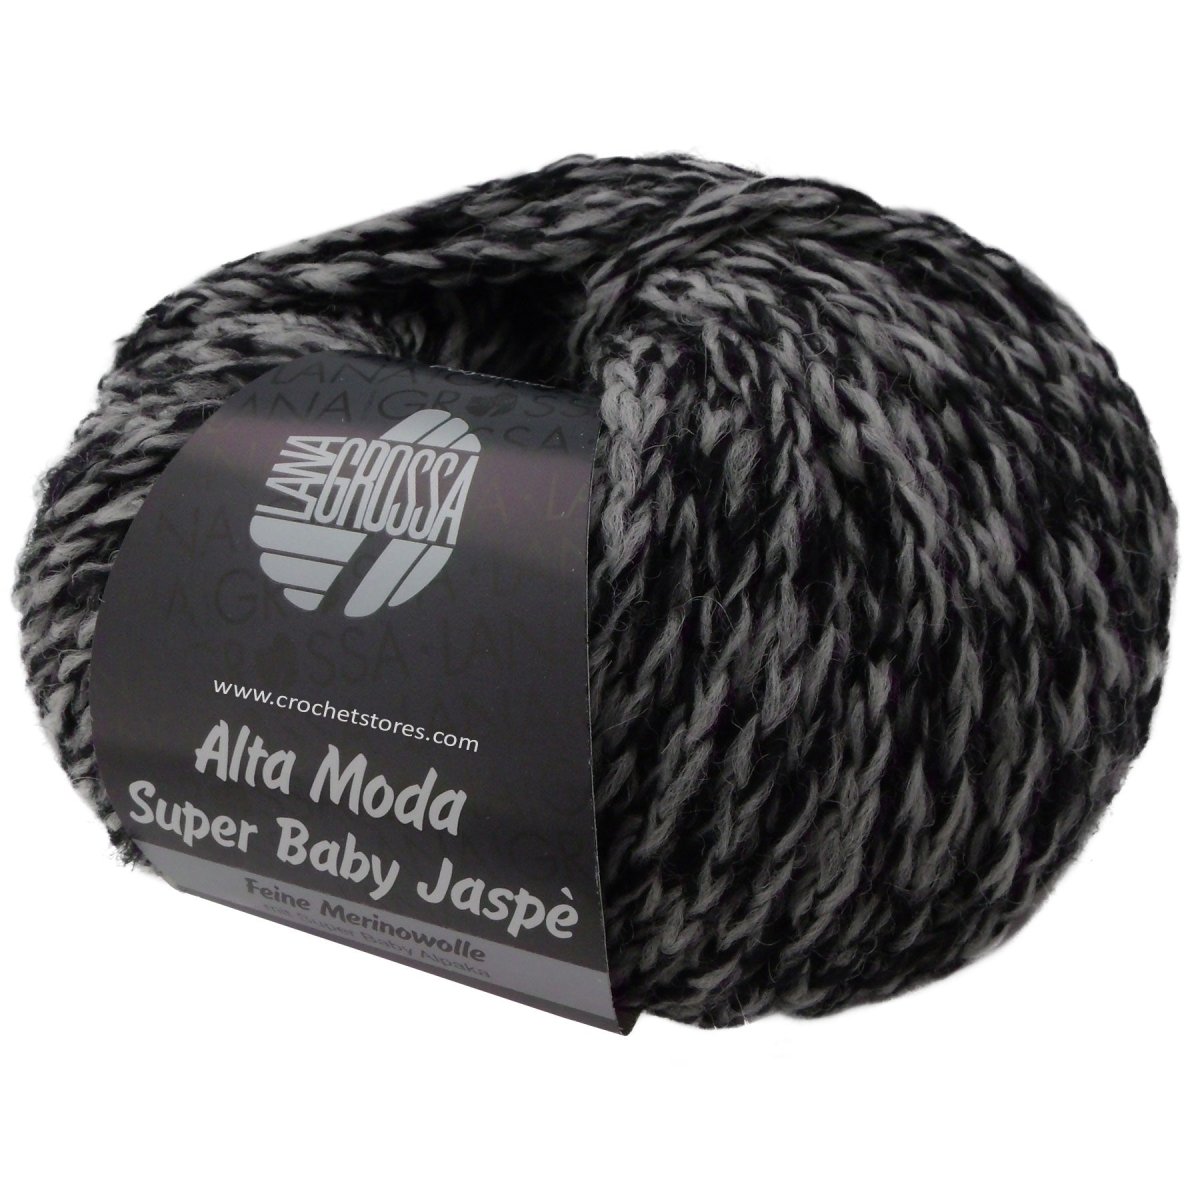 ALTA MODA SUPER BABY - Crochetstores779-01084033493163613